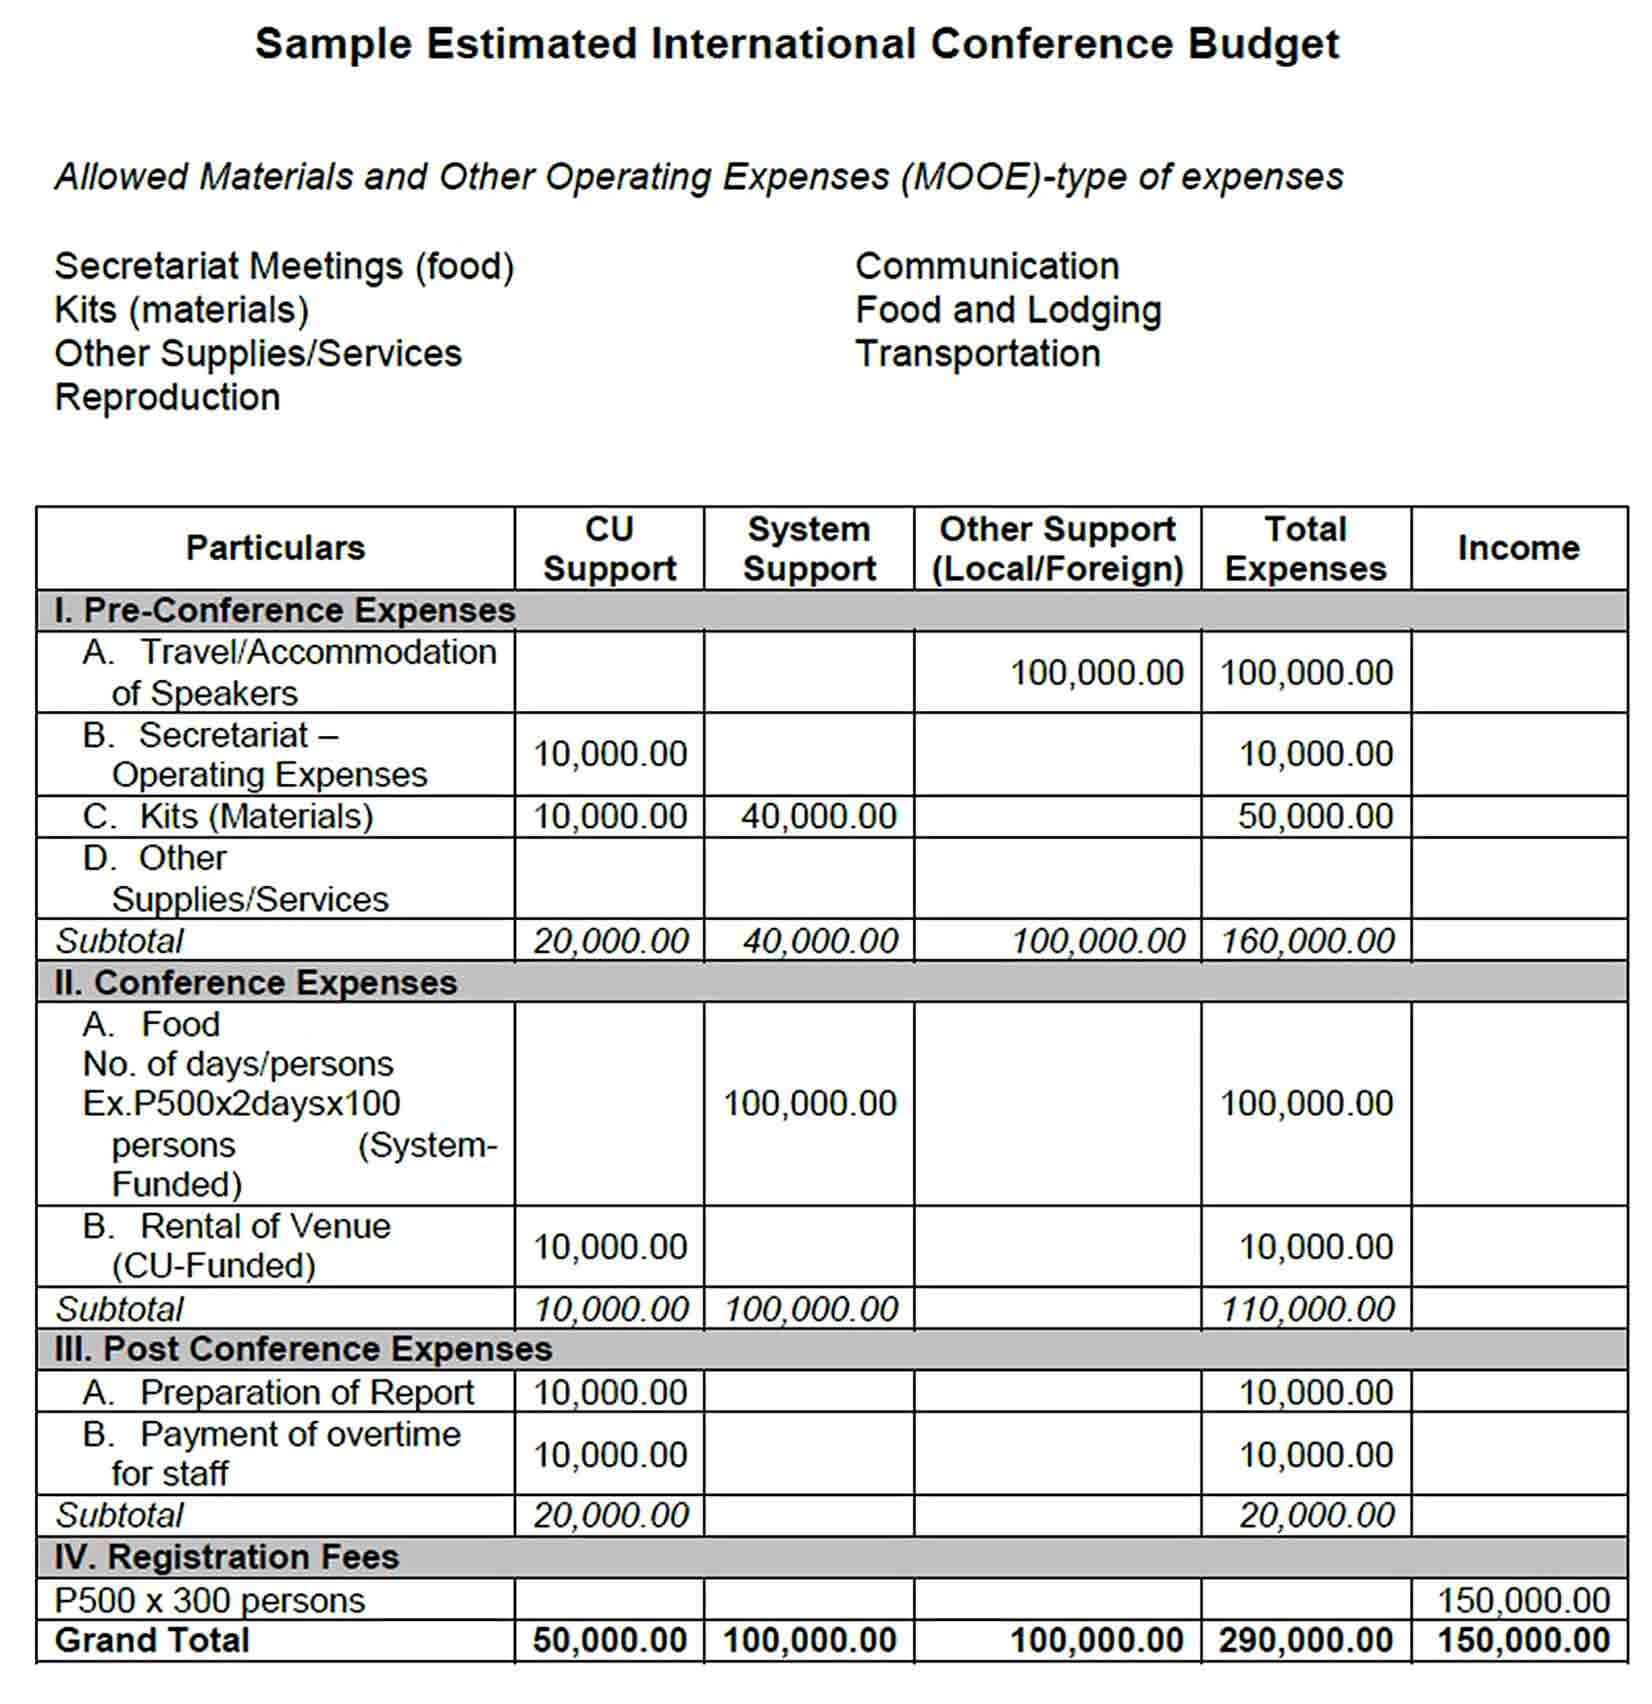 Sample Estimated International Conference Budget